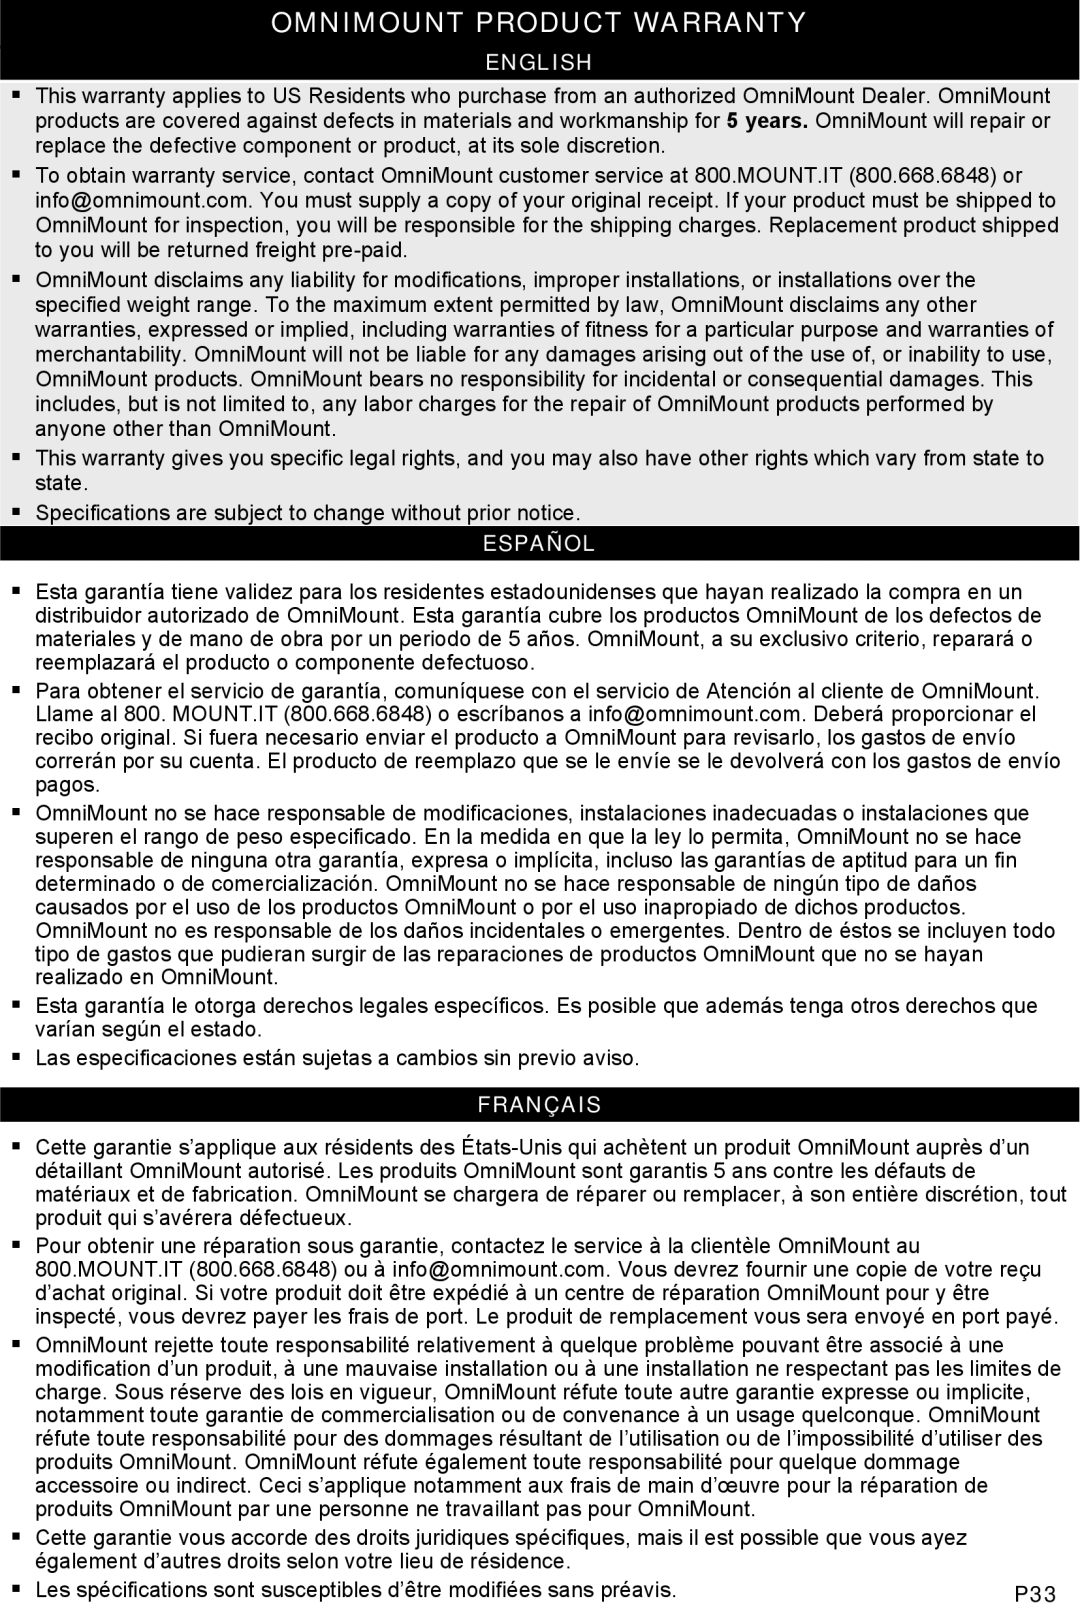 Omnimount MWFS, UL10021ULN instruction manual Omnimount Product Warranty, English, Español, Français 